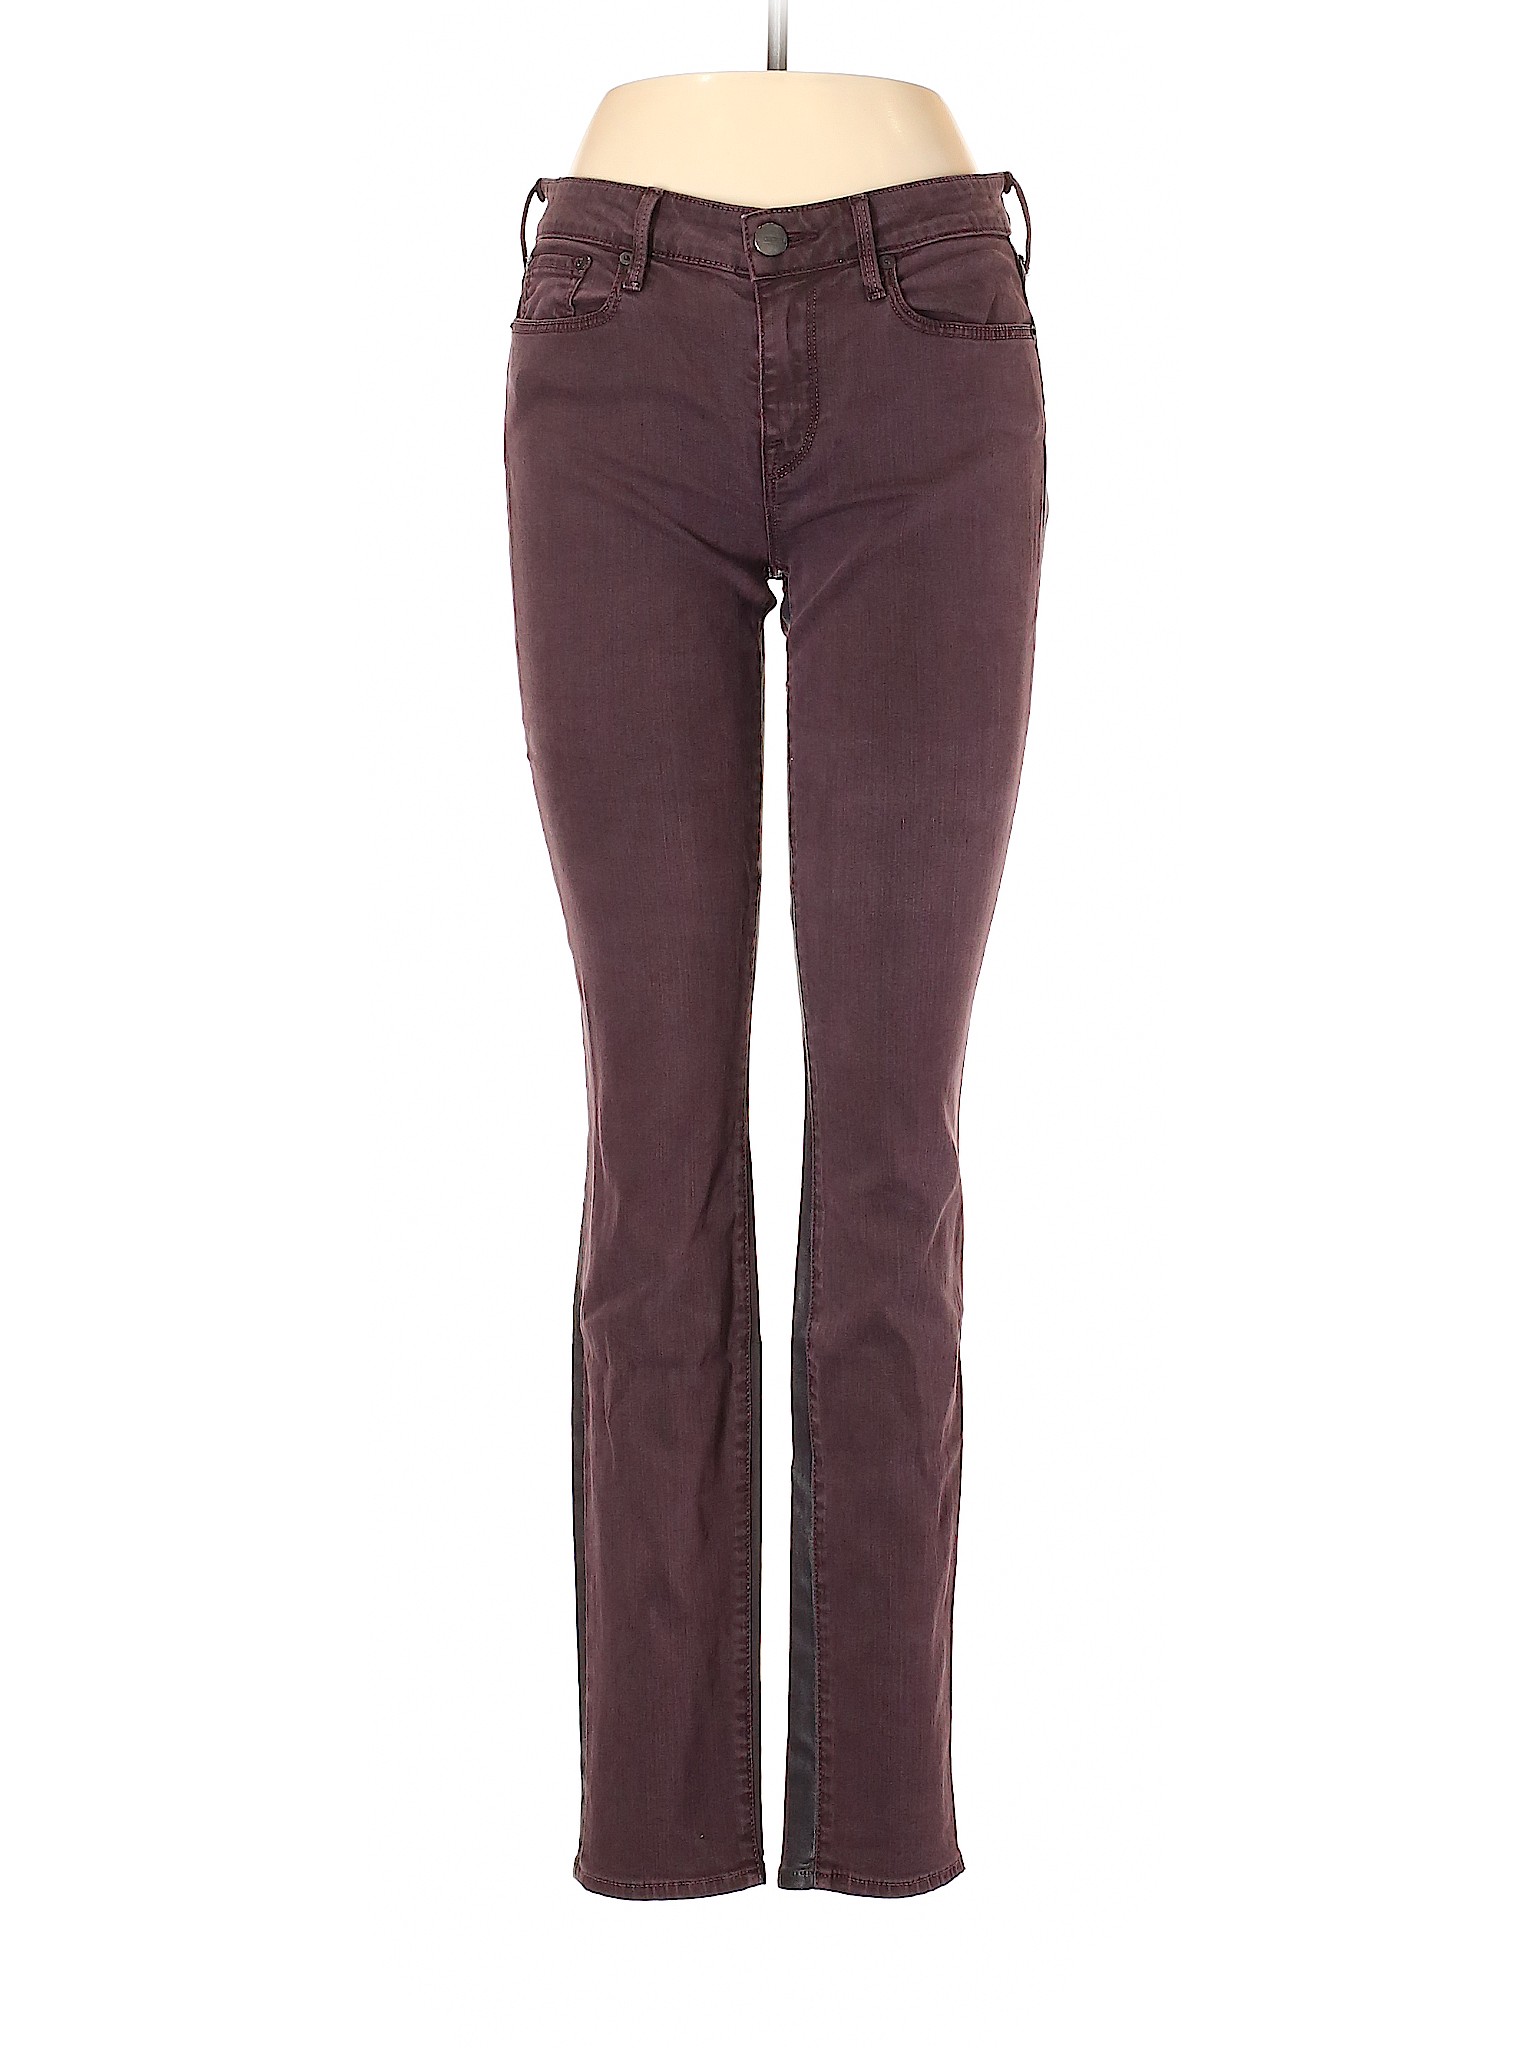 Vince. Solid Purple Jeans 28 Waist - 75% off | thredUP